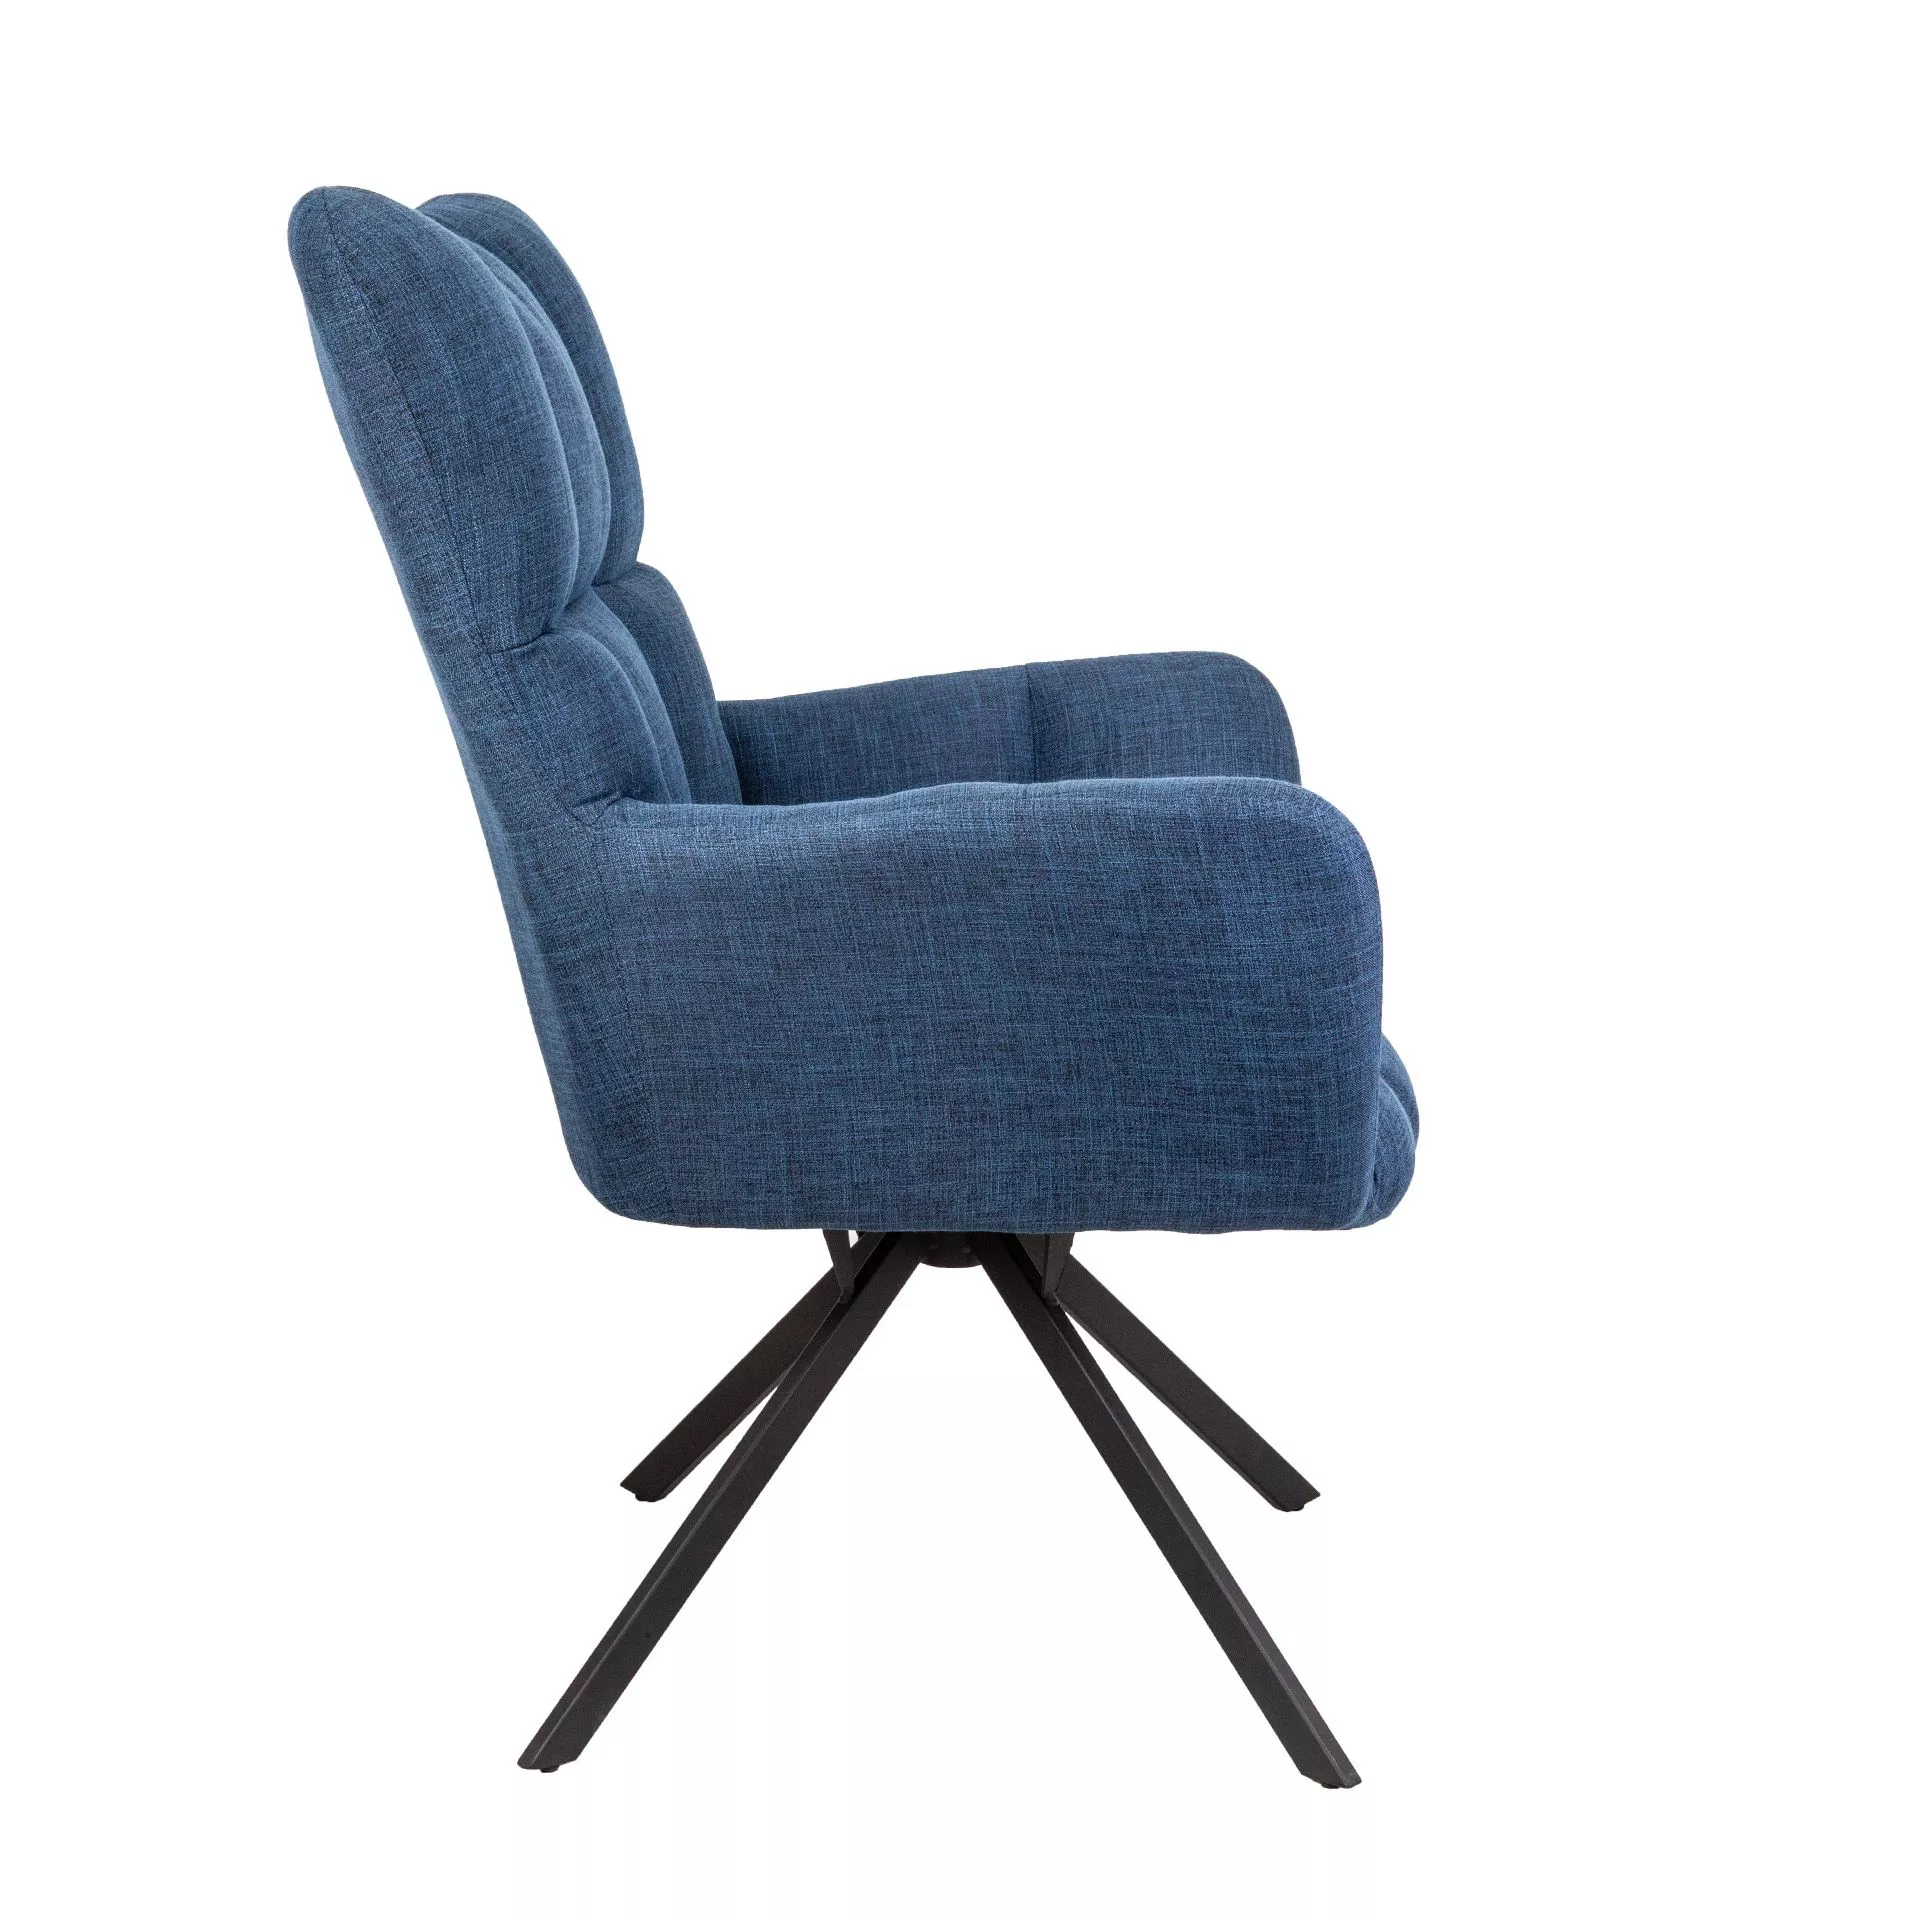 Кресло Colorado темно-синий ткань 70510